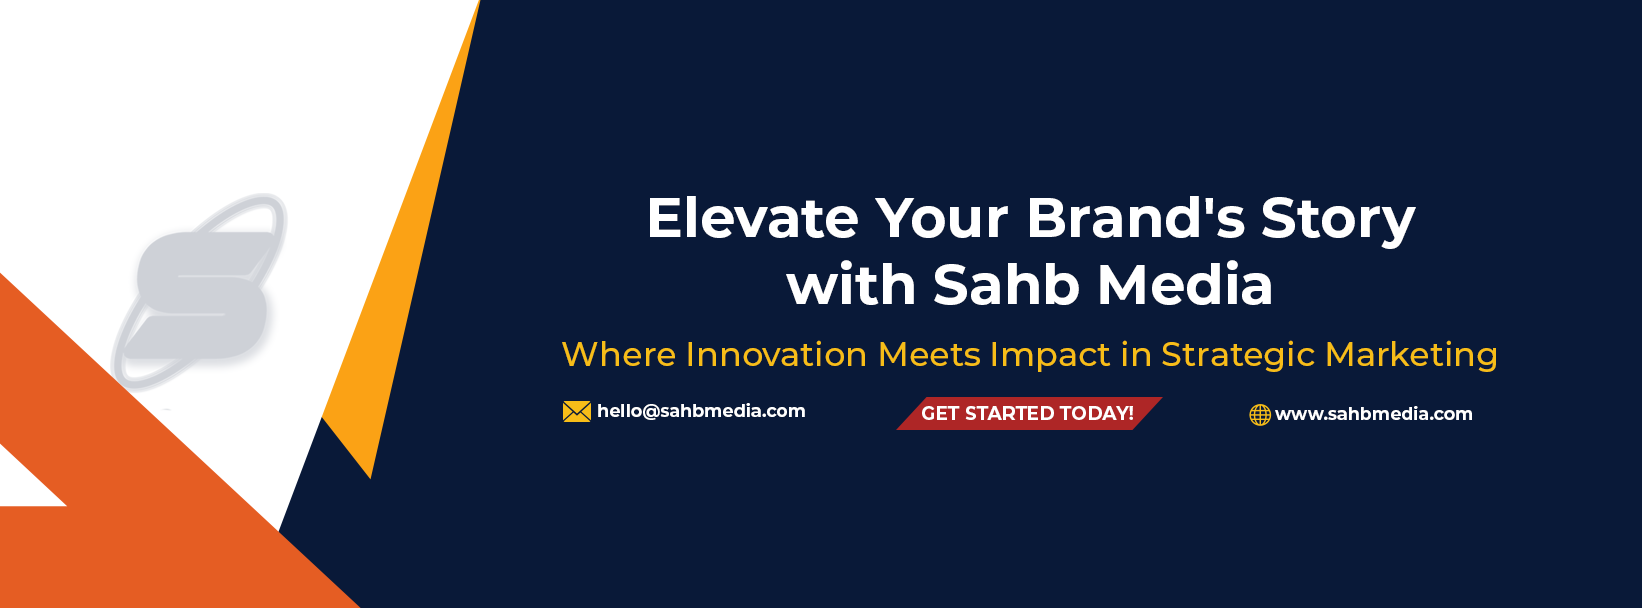 Sahb Media Services Banner